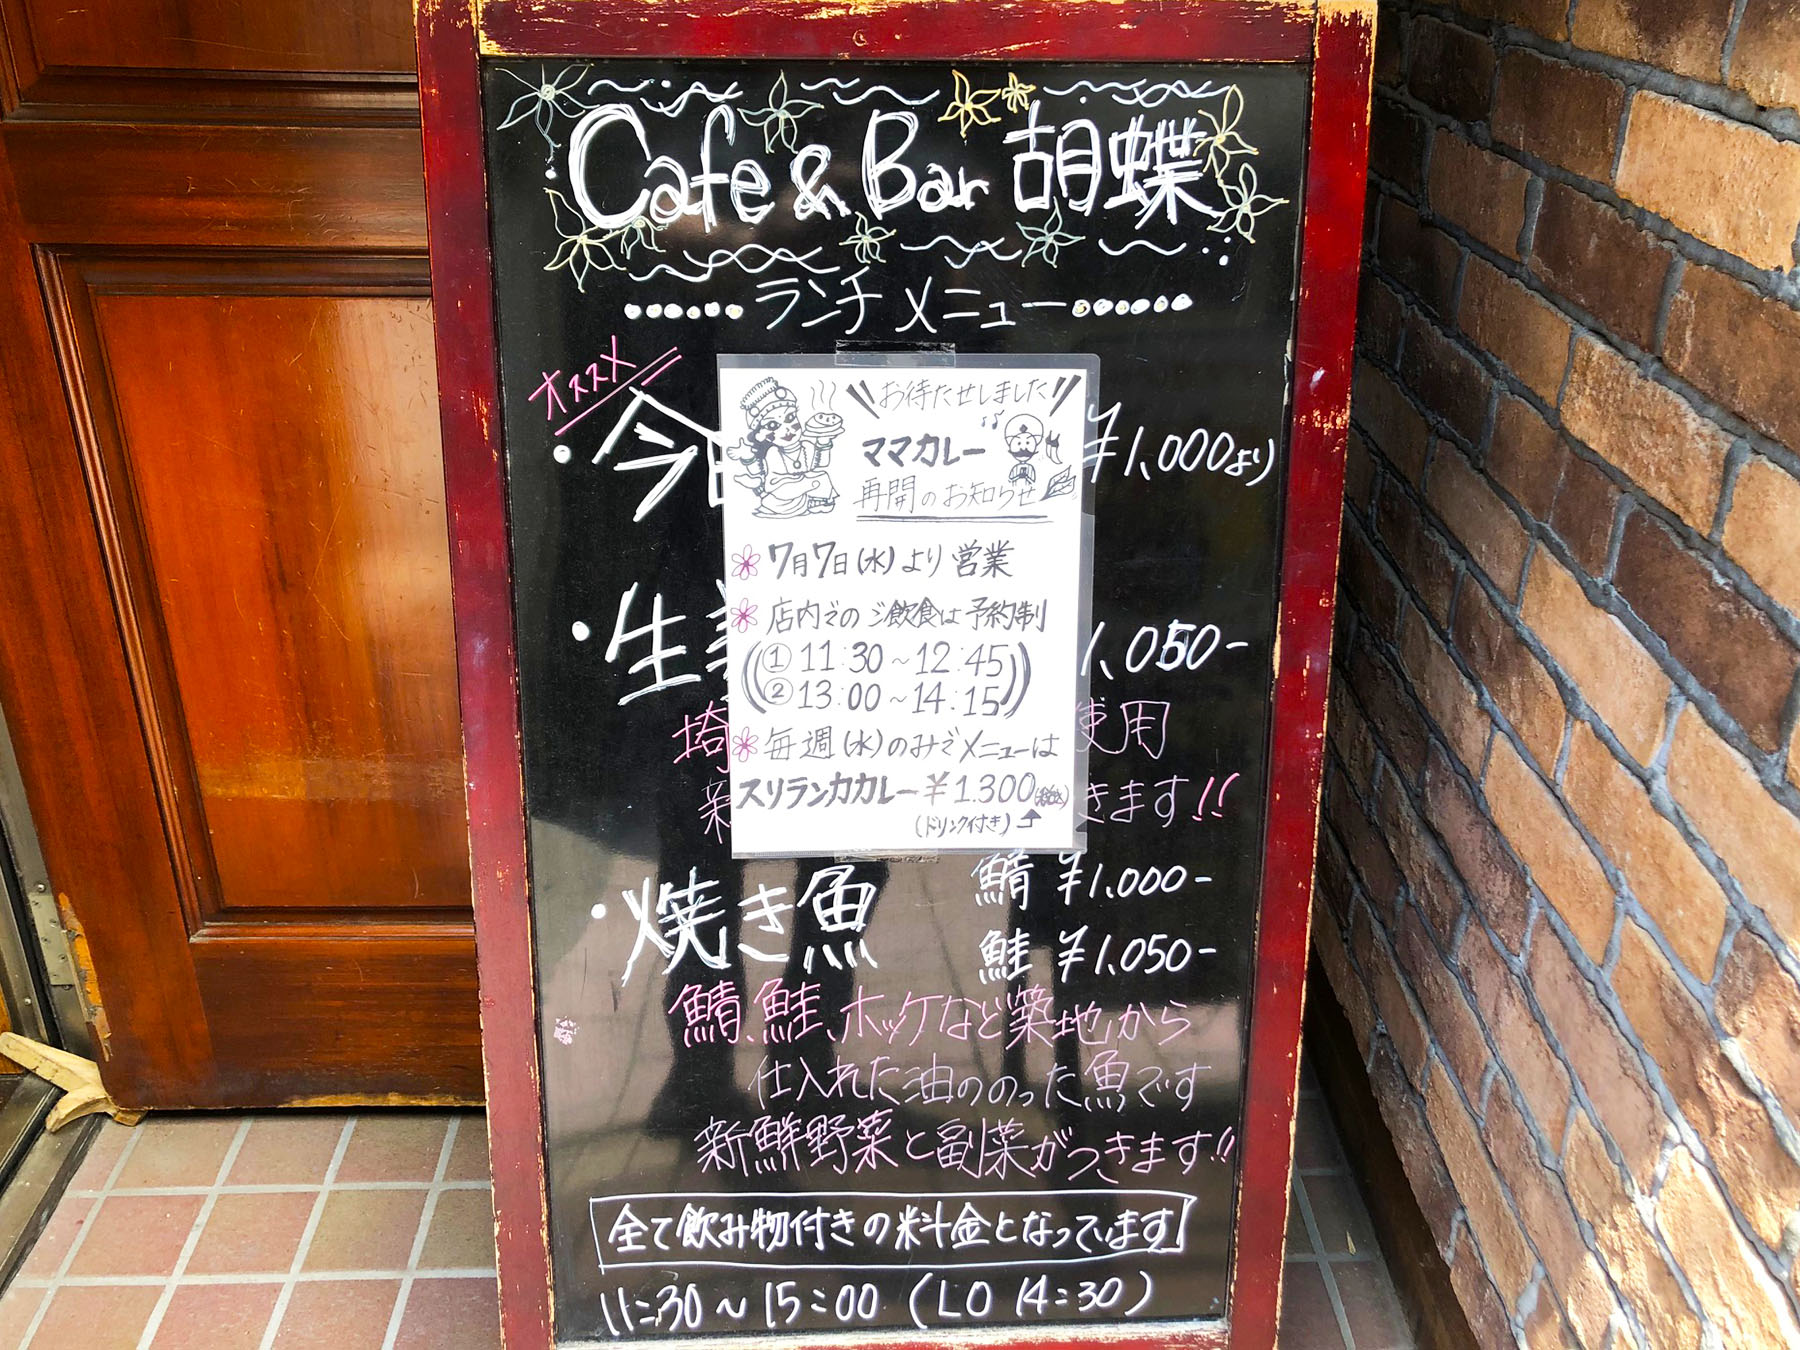 Cafe&Bar胡蝶の入口にある立て看板